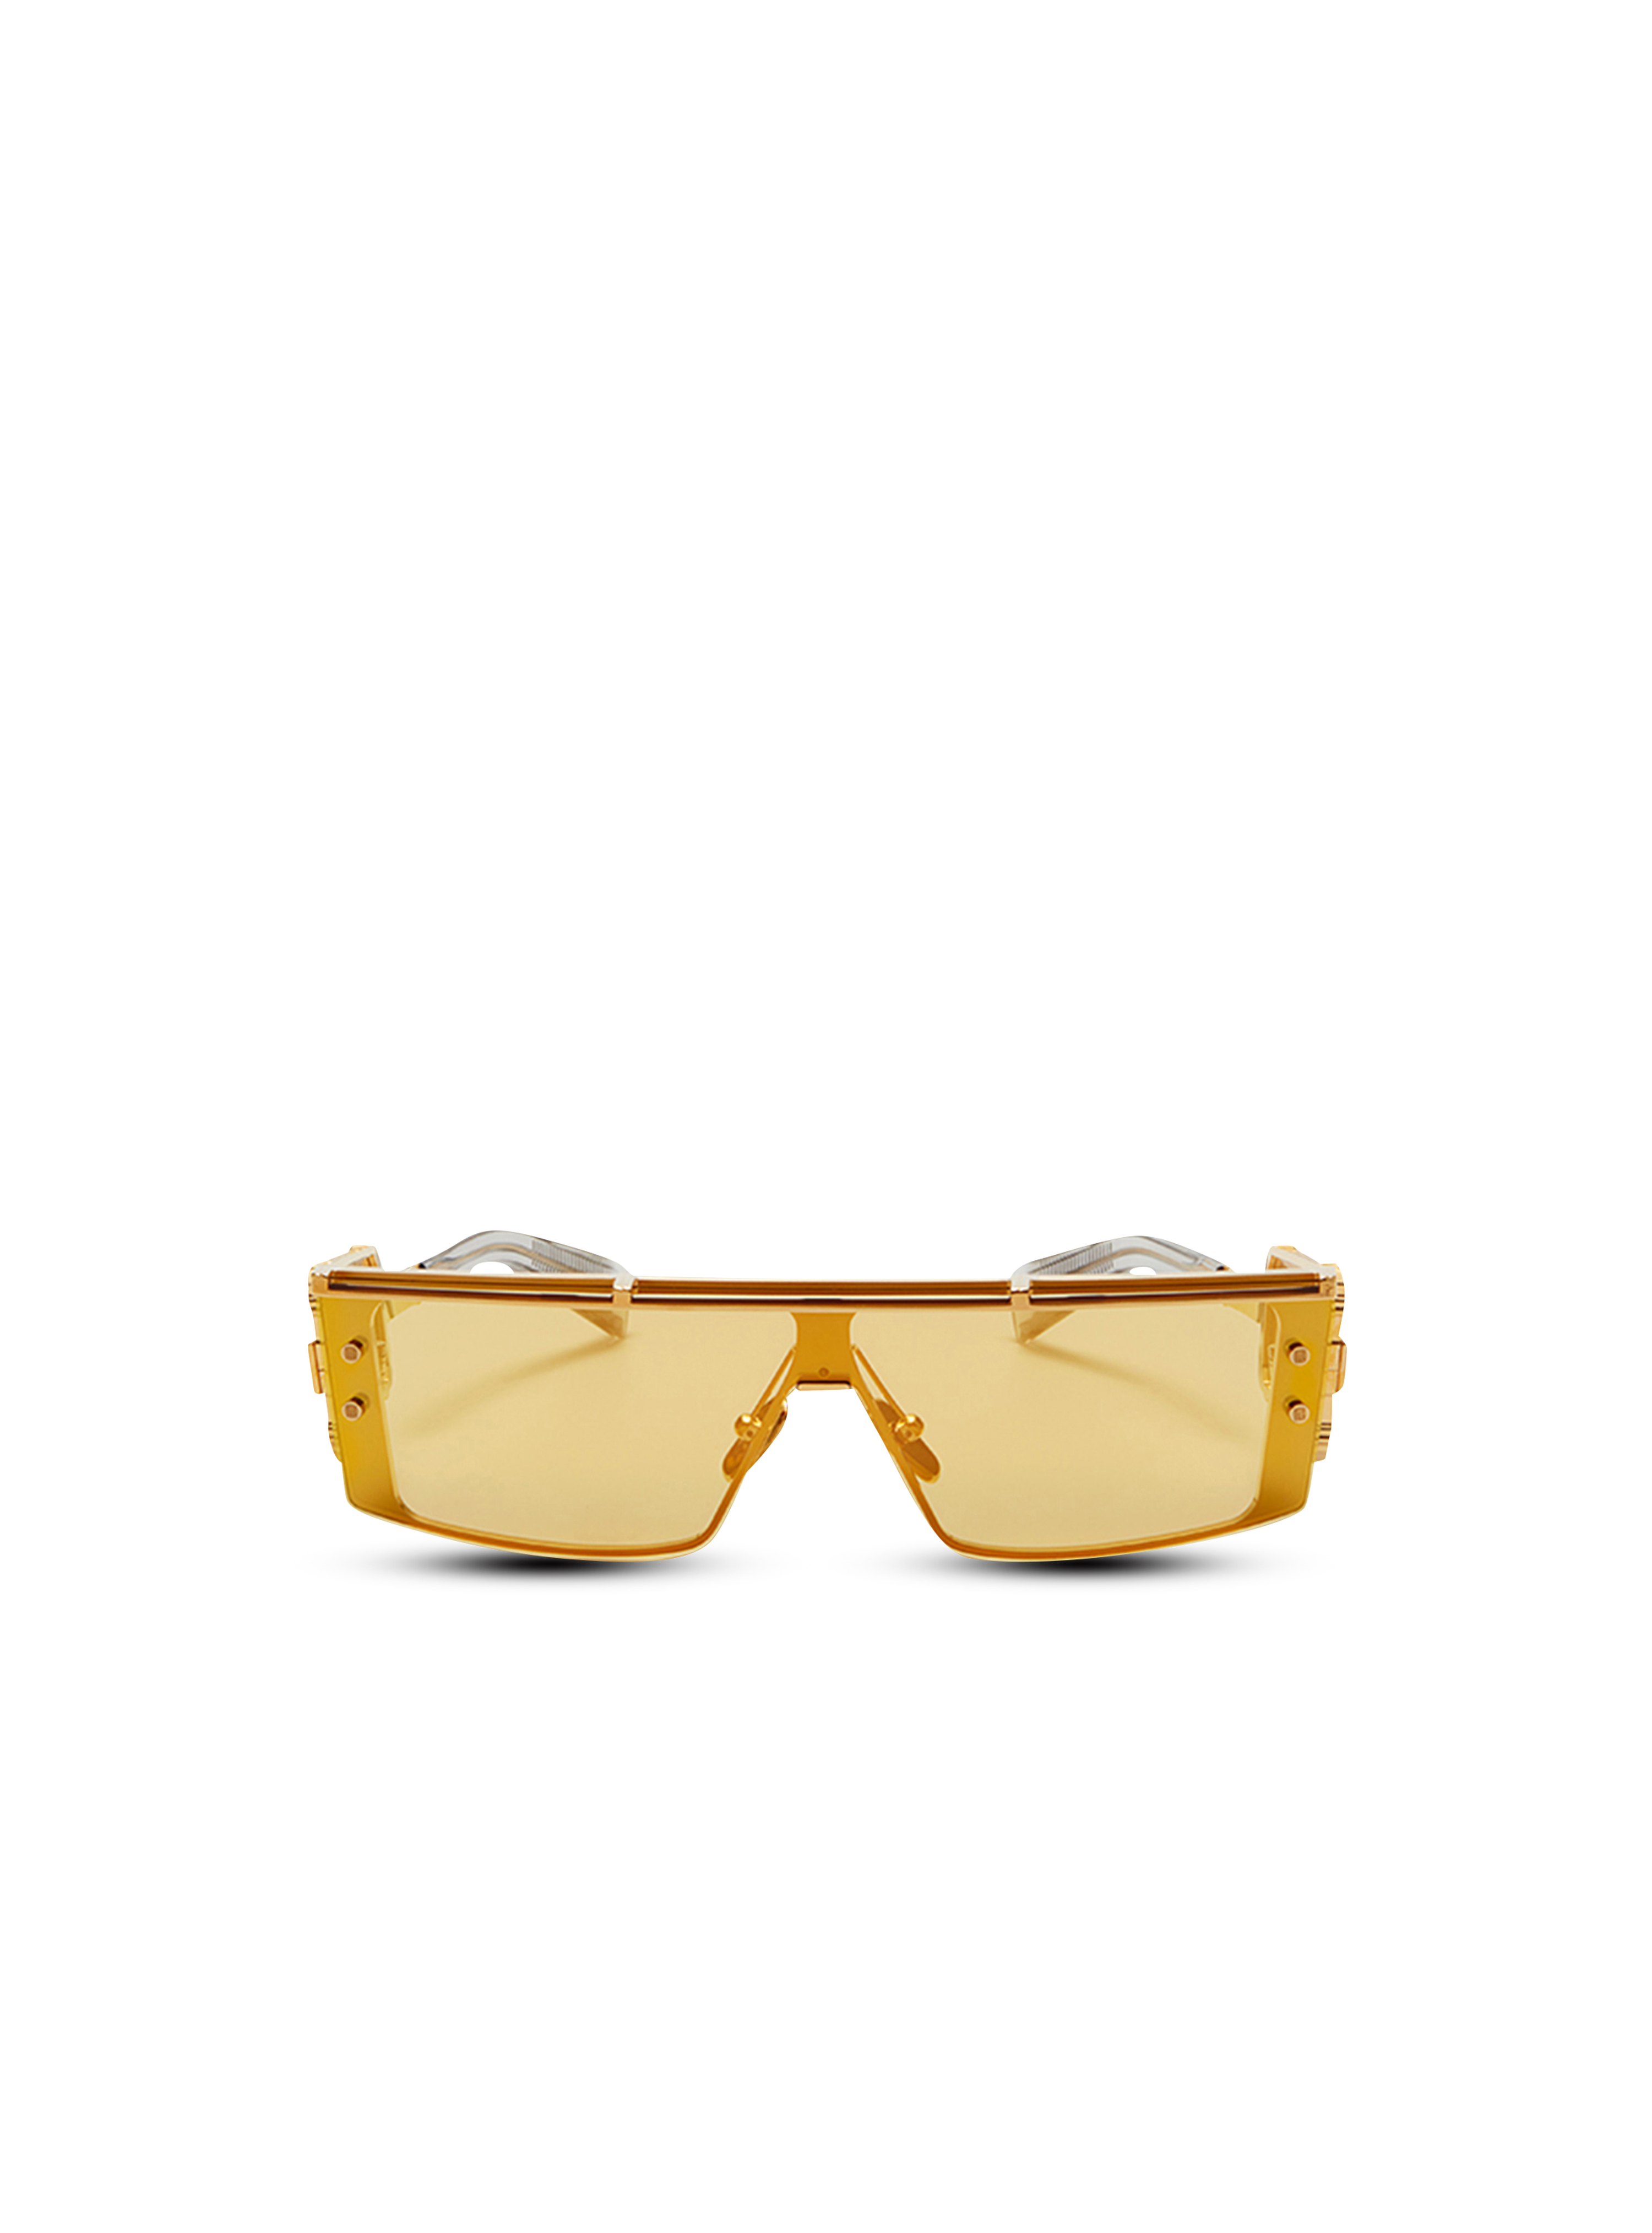 Wonder Boy III sunglasses, gold